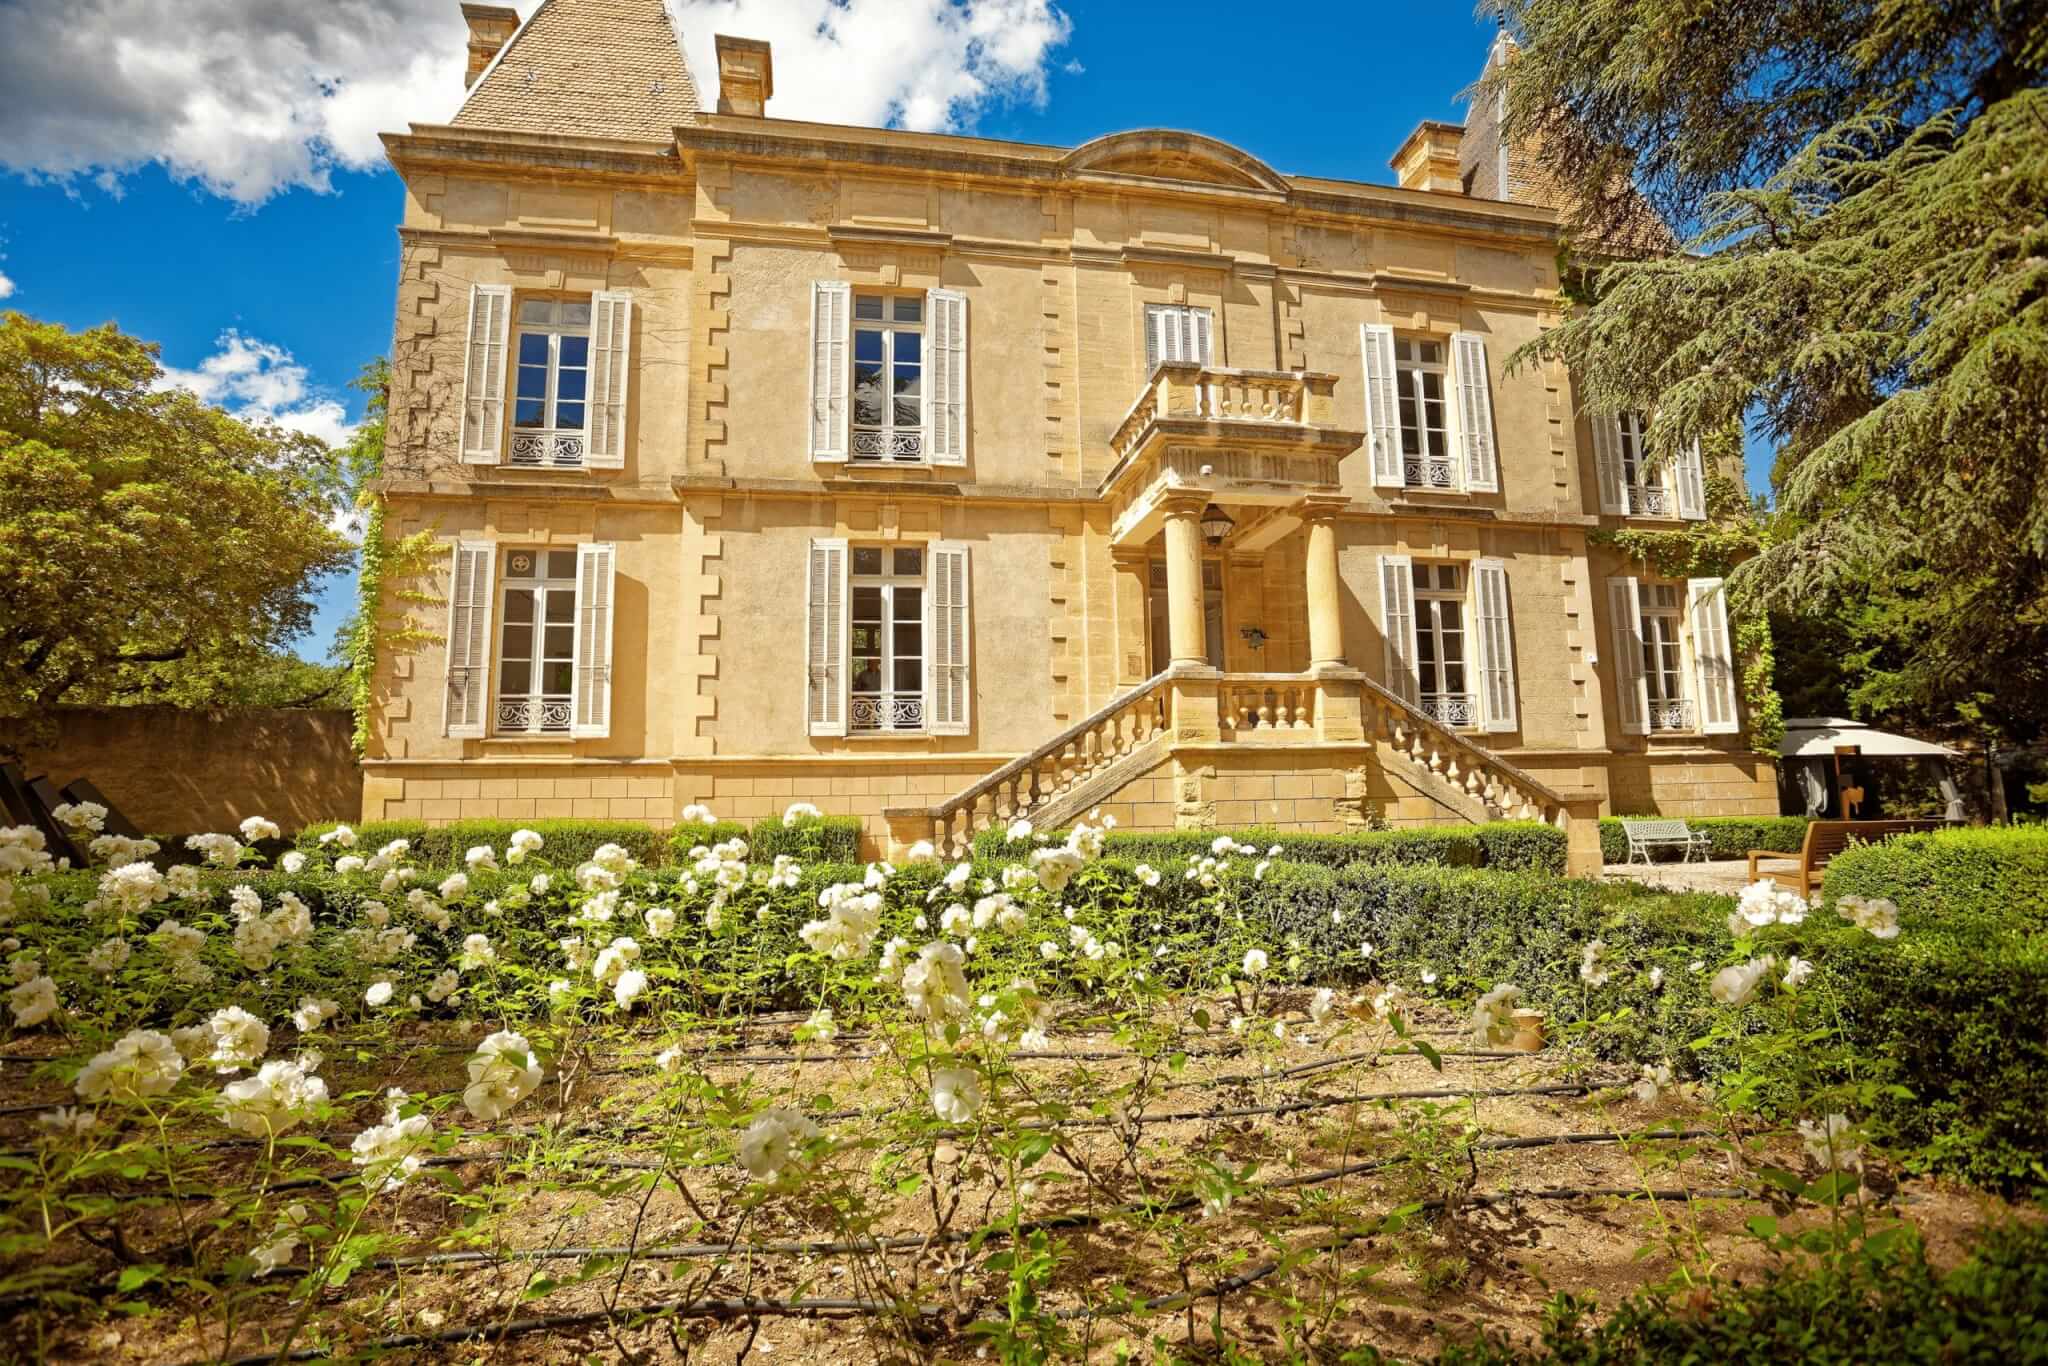 Château de Bosc © www.chateaudebosc.fr